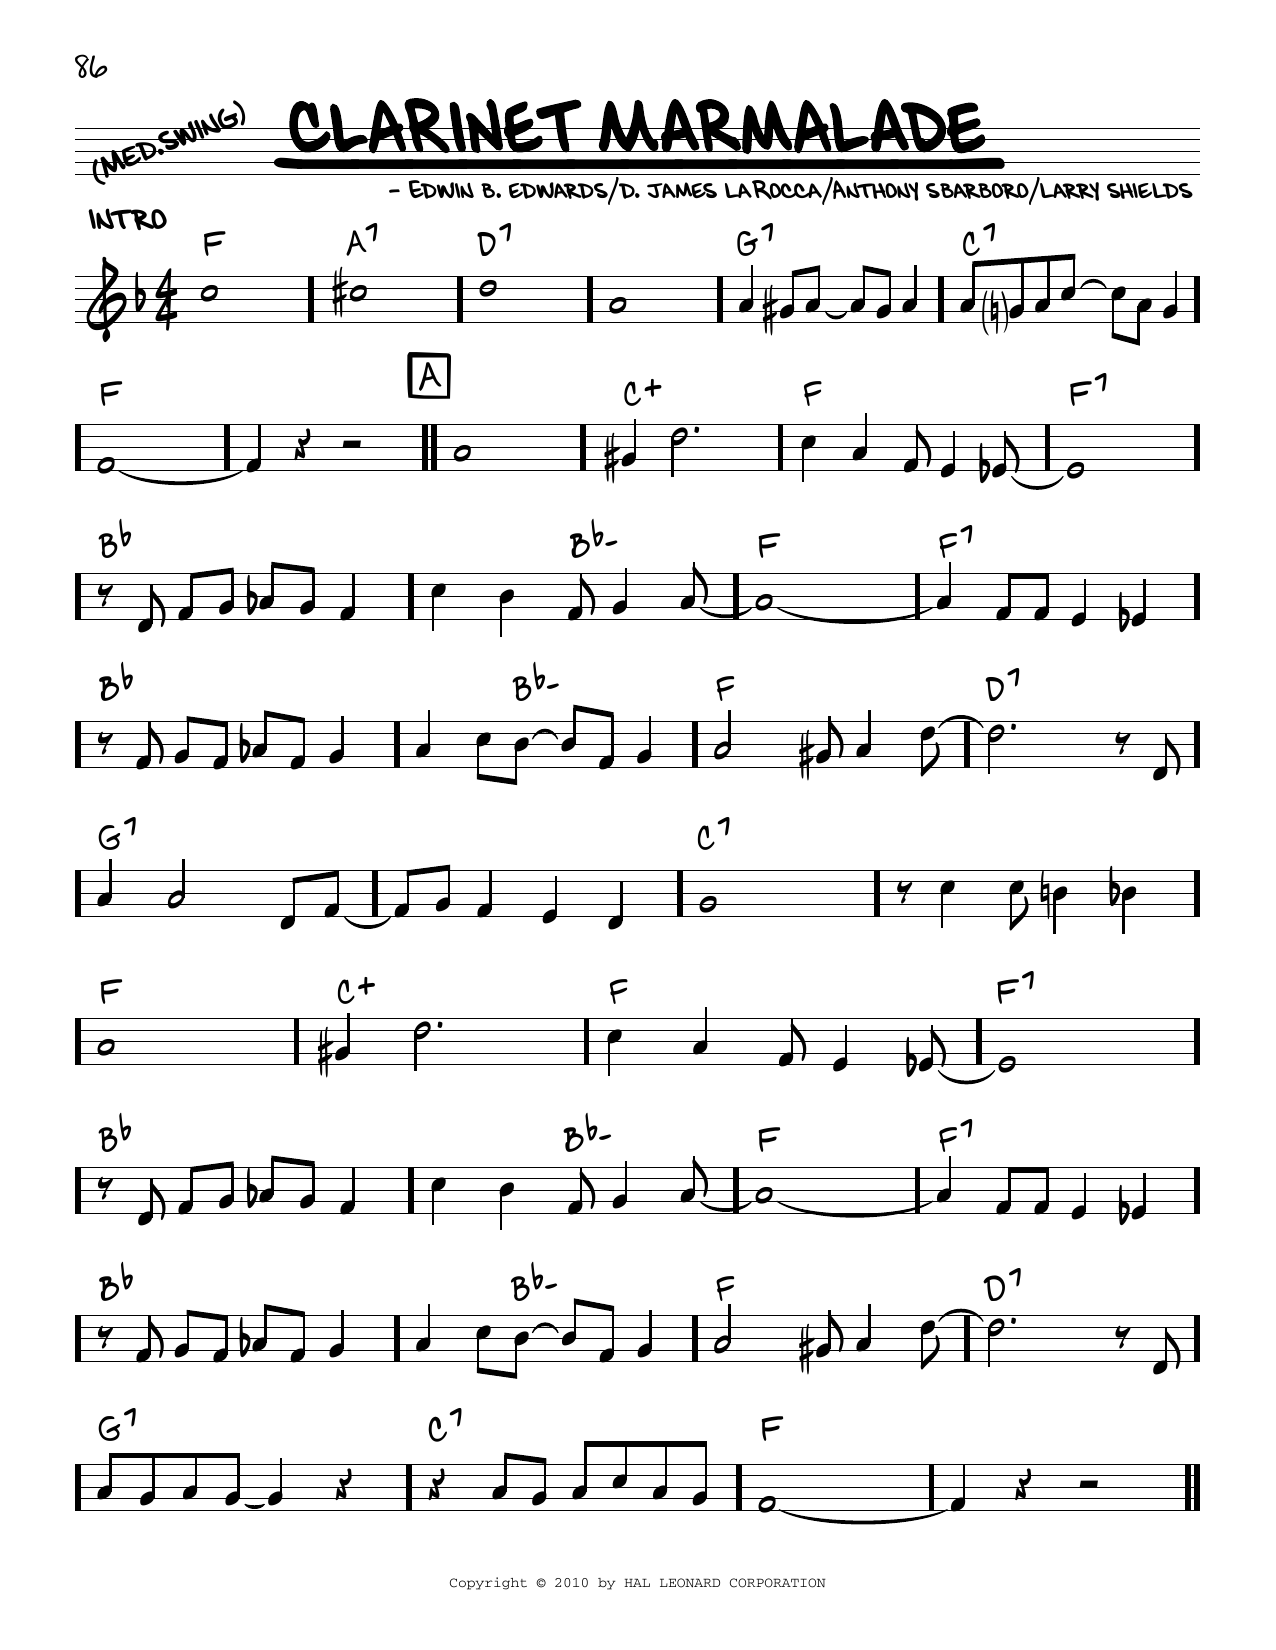 The Original Dixieland Jazz Band Clarinet Marmalade (arr. Robert Rawlins) Sheet Music Notes & Chords for Real Book – Melody, Lyrics & Chords - Download or Print PDF